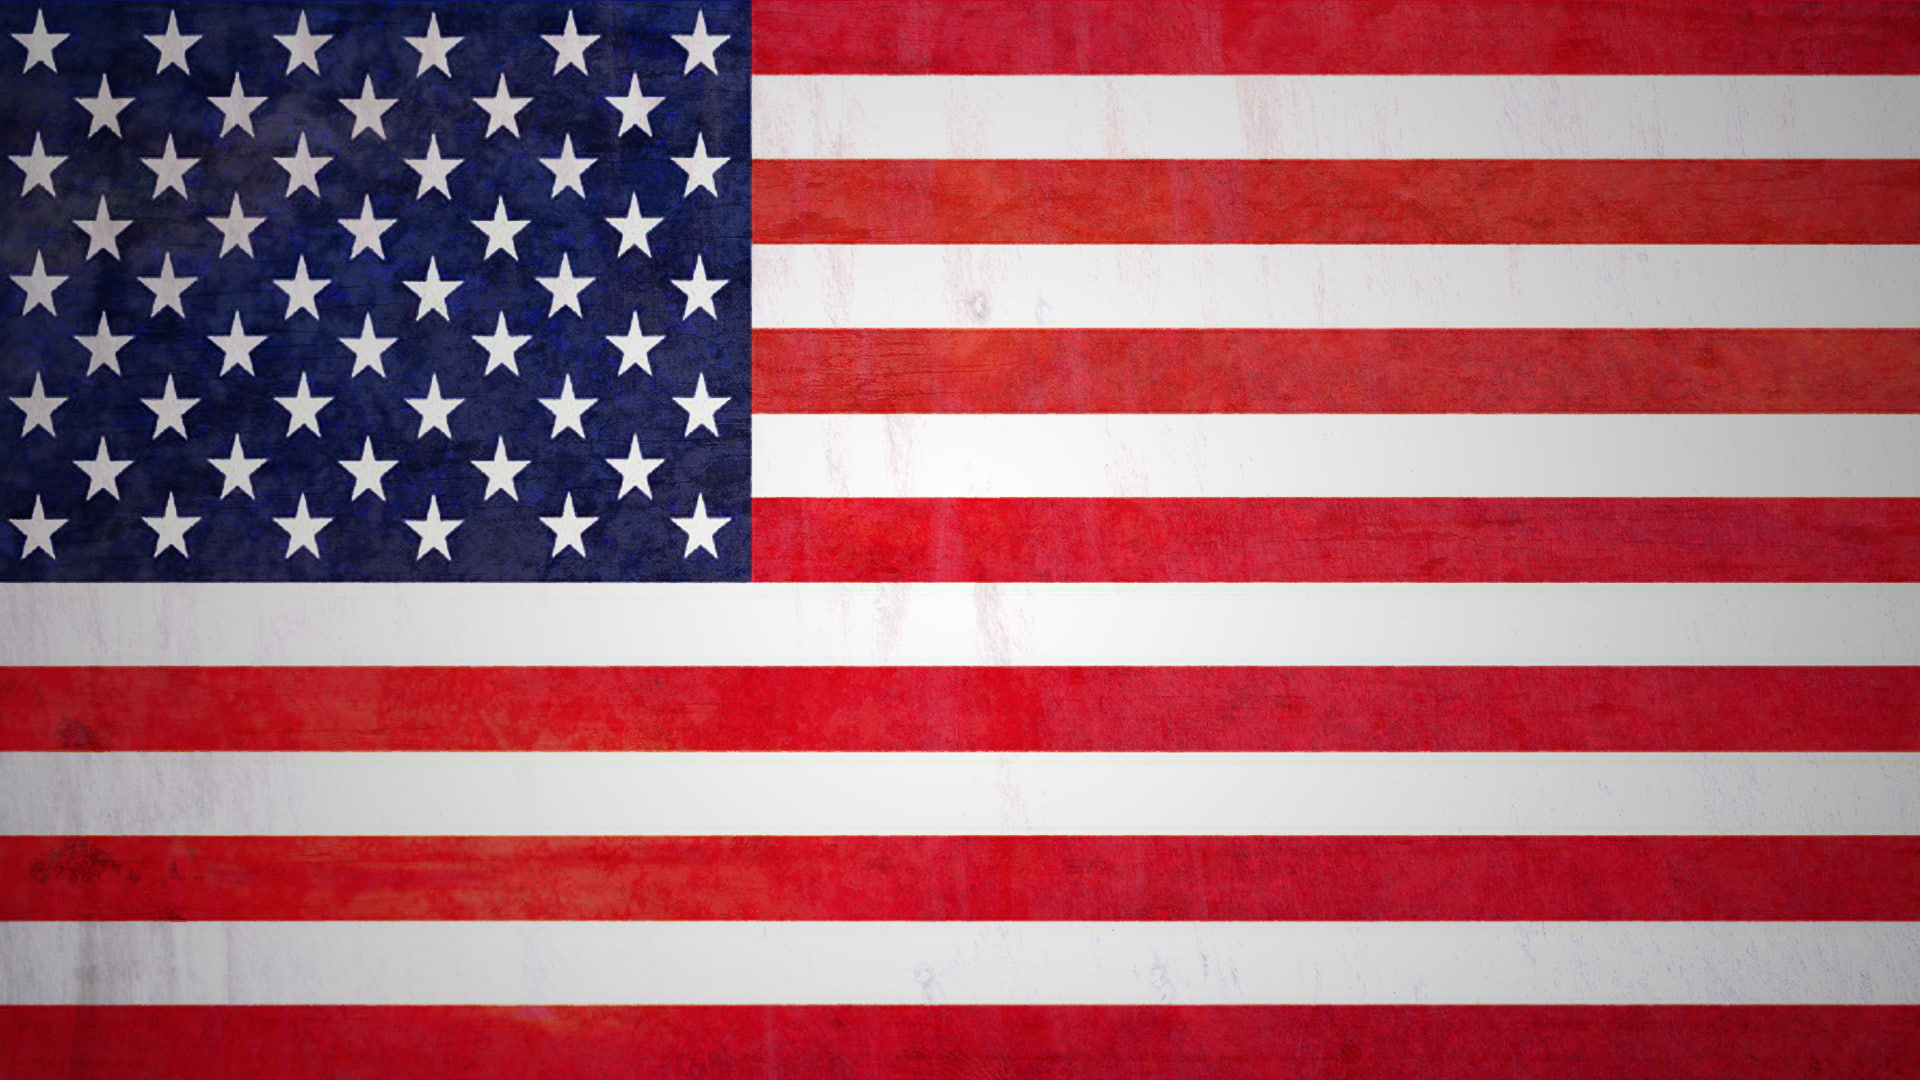 USA, flag, American flag, patriotism, striped, red, star shape